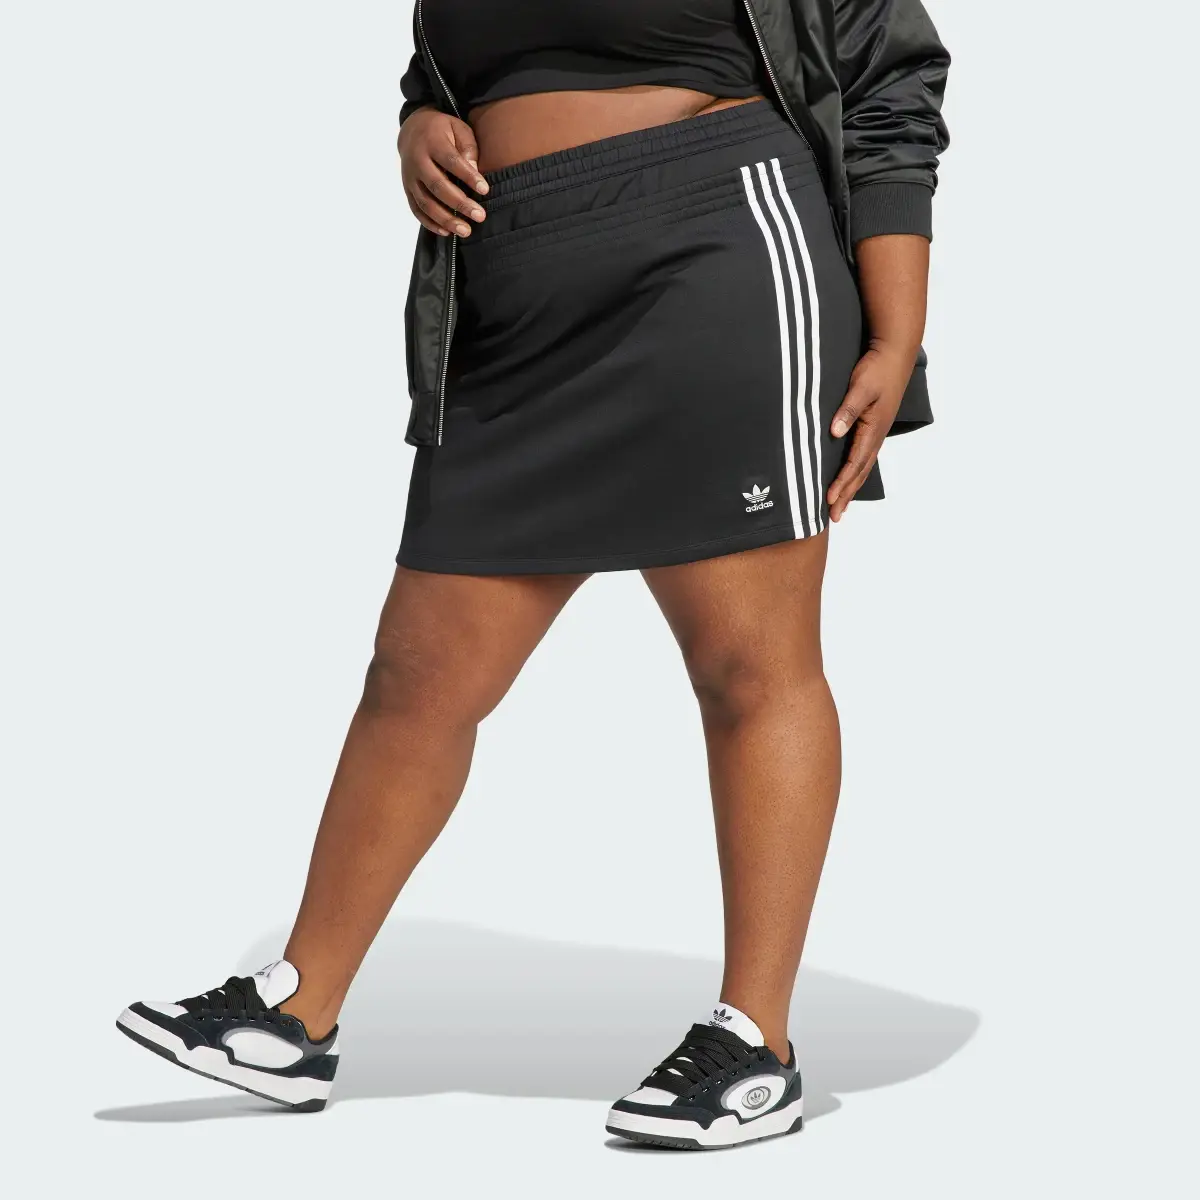 Adidas Always Original Skirt (Plus Size). 1